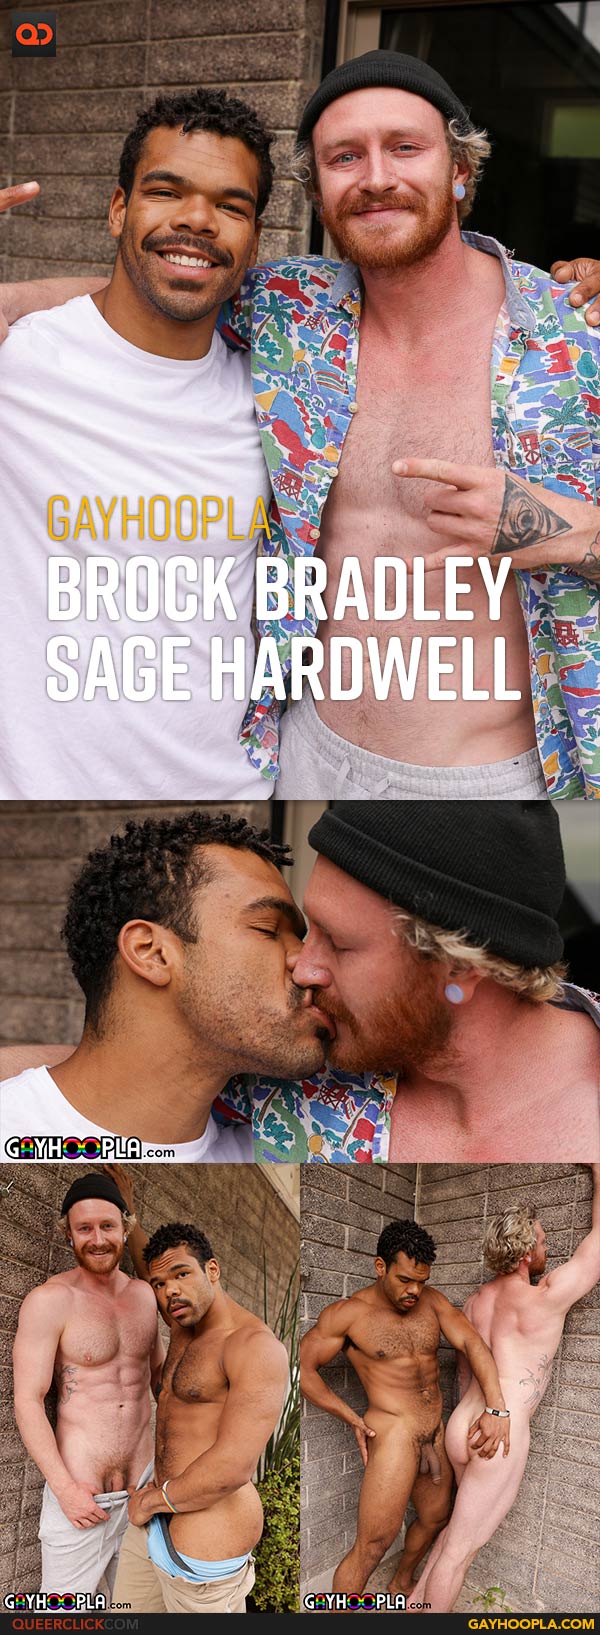 Gayhoopla: Brock Bradley Fucks Sage Hardwell